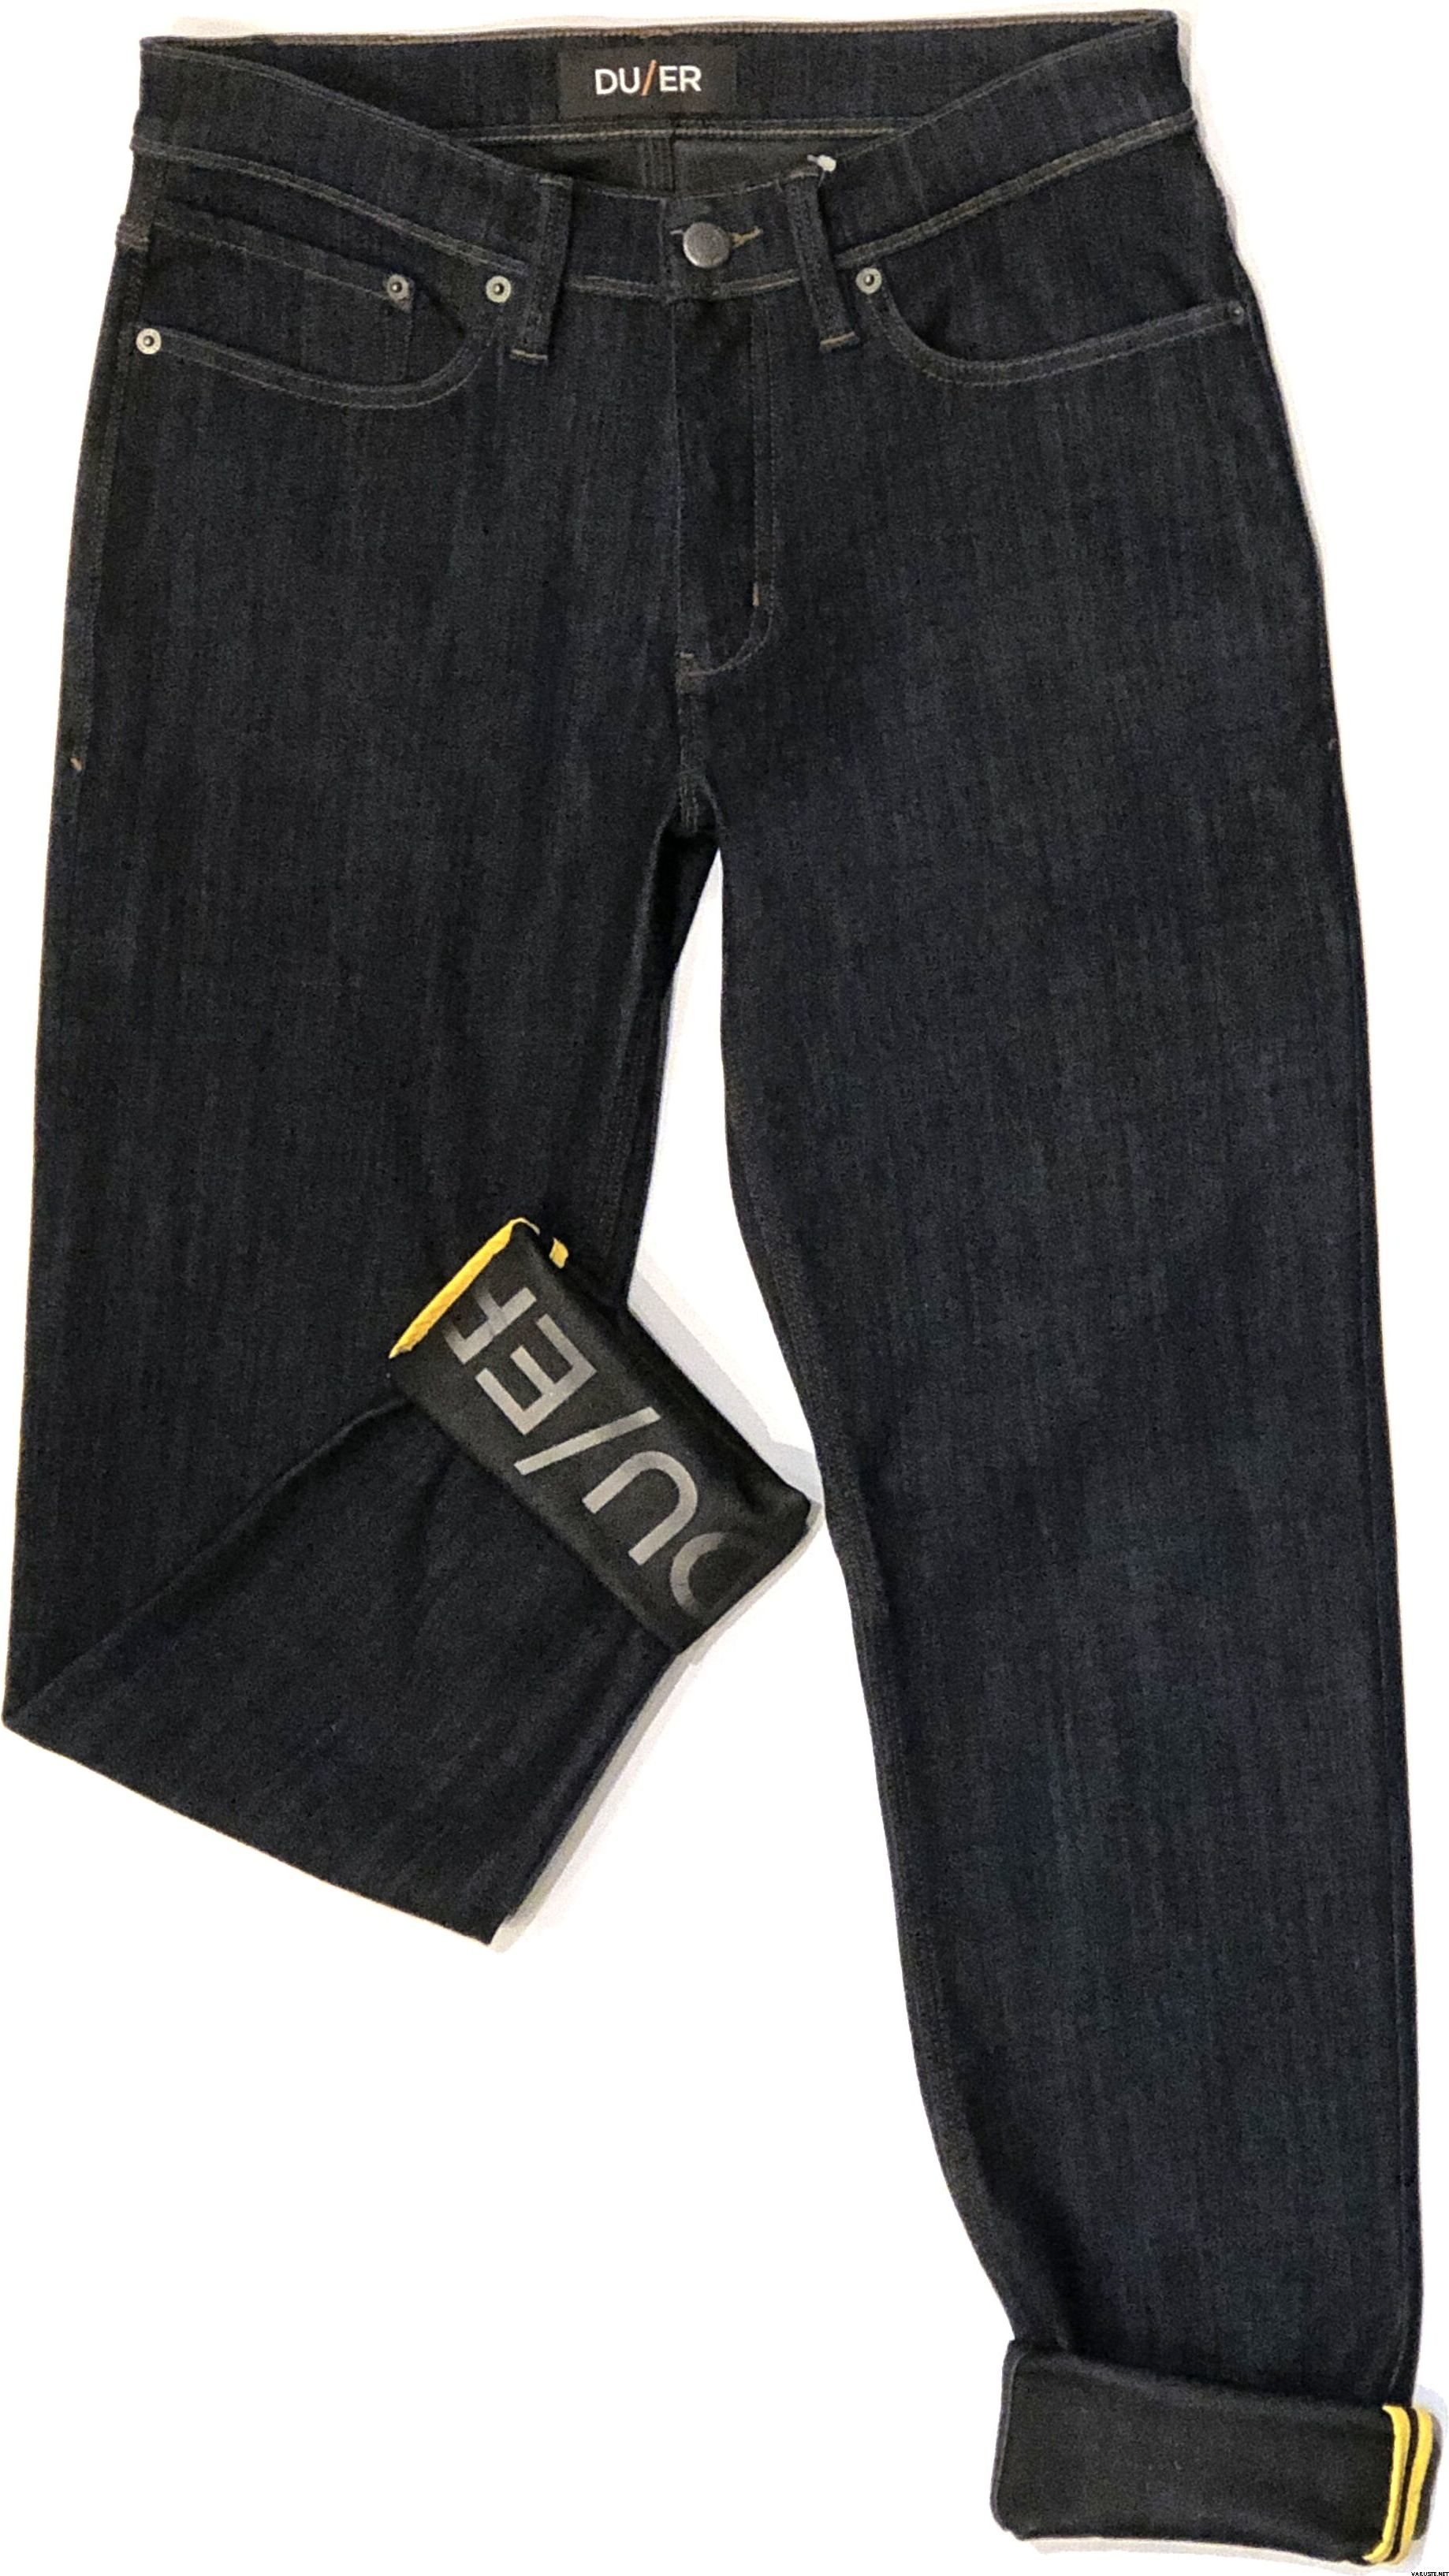 Duer All-Weather Performance Denim Slim Jeans | Vapaa-ajan housut | Varuste.net